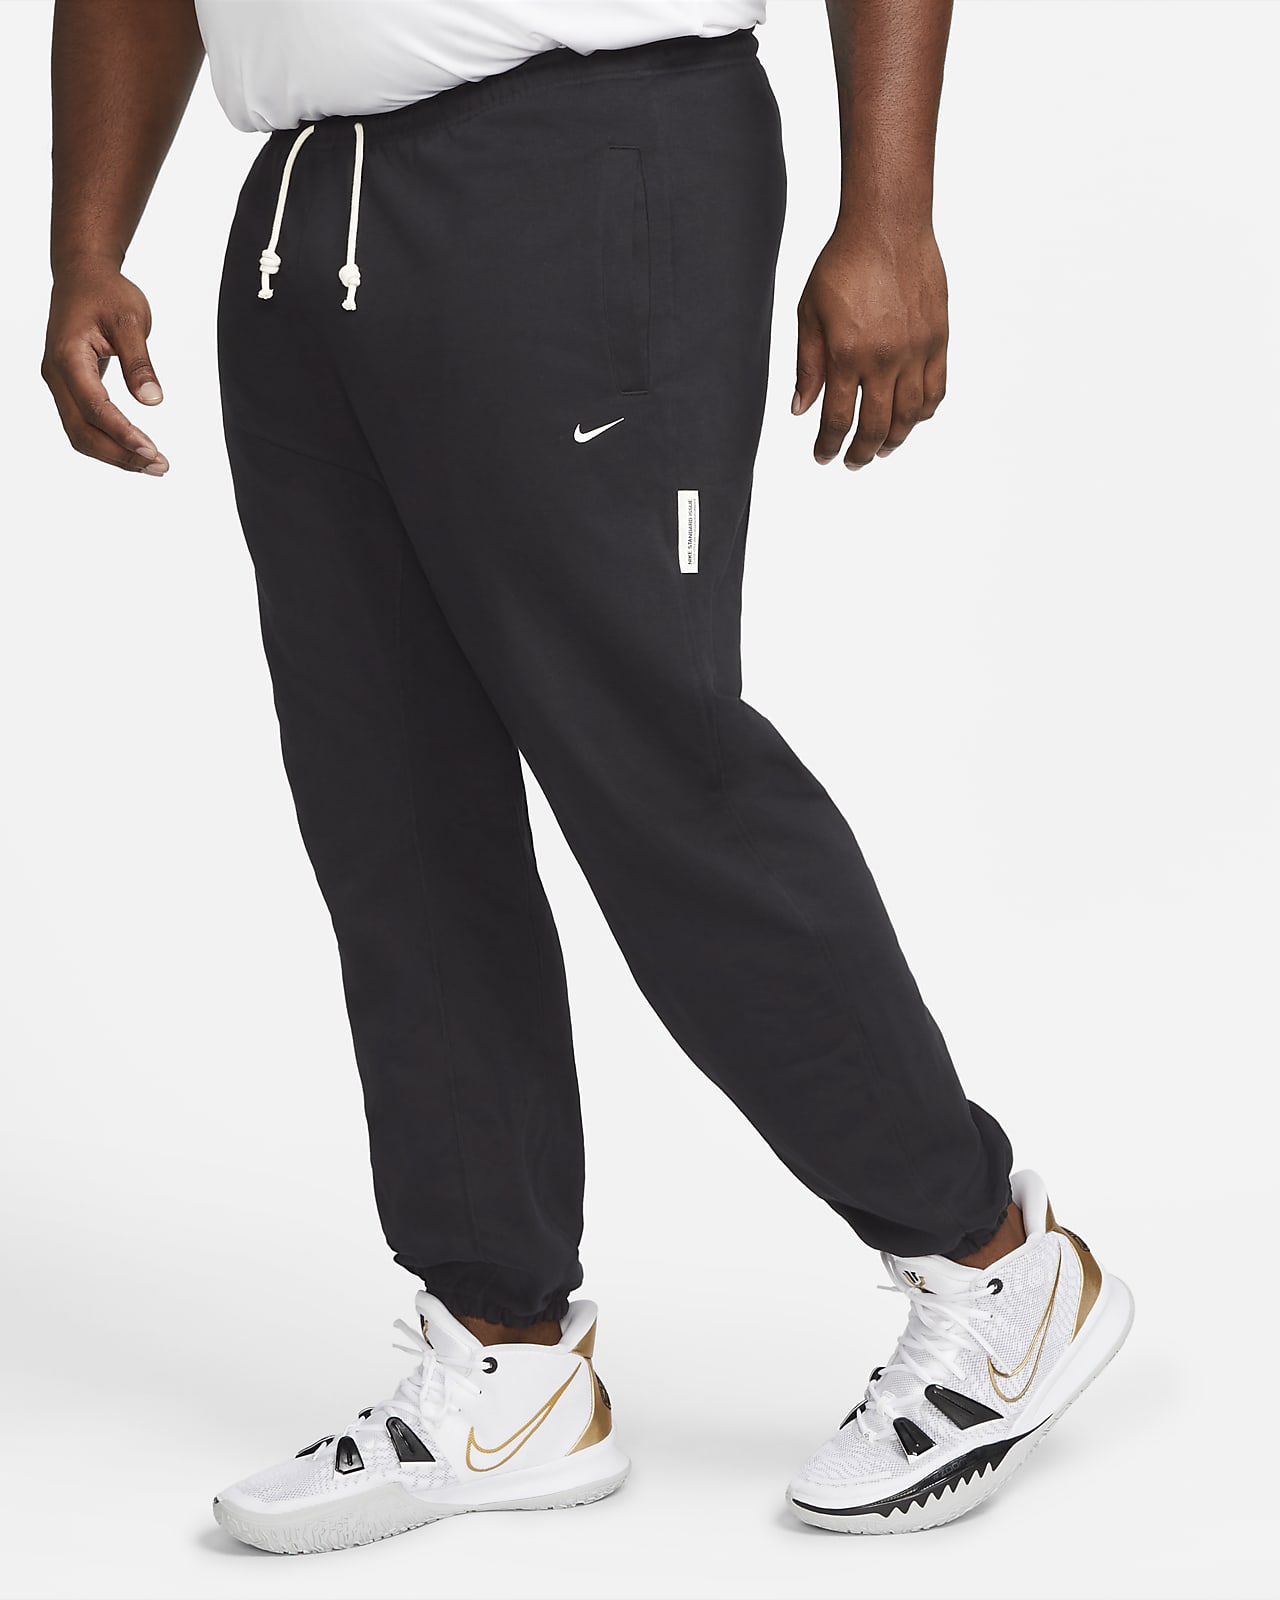 Men's Nike Heathered Charcoal USA Basketball Spotlight Pants